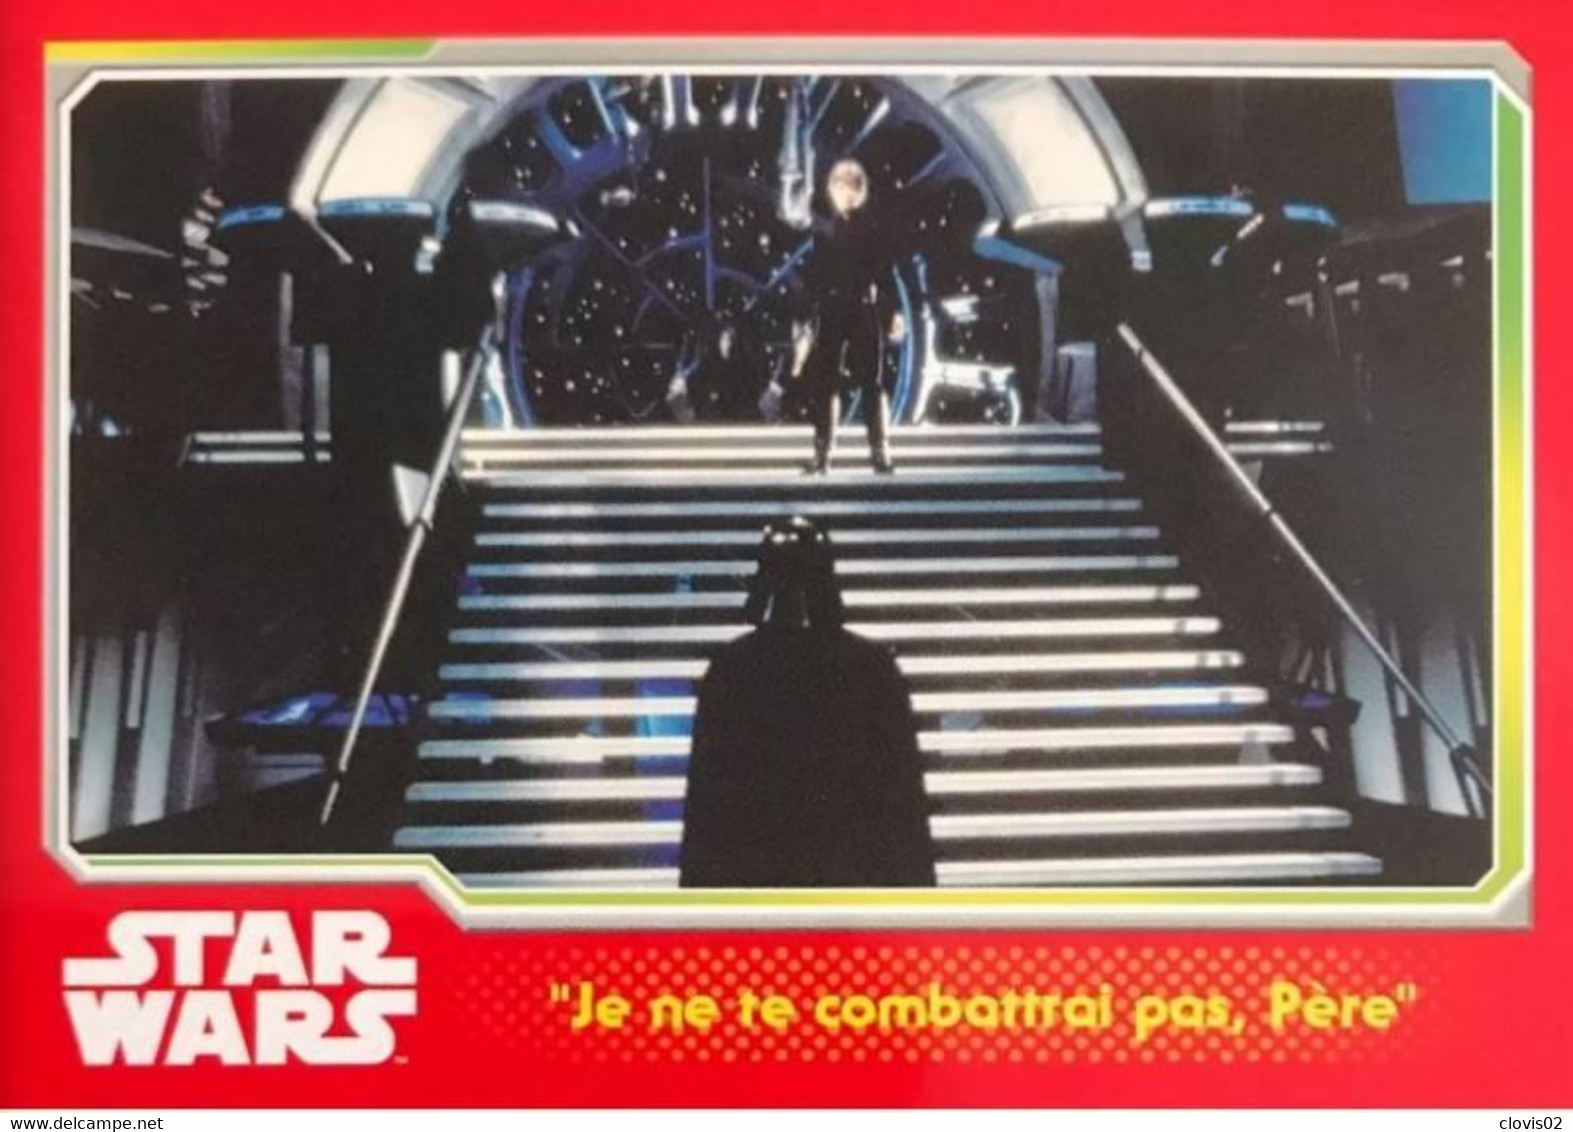 Trading Cards Topps N.138 - Voyage Vers Star Wars  Le Réveil De La Force - Star Wars